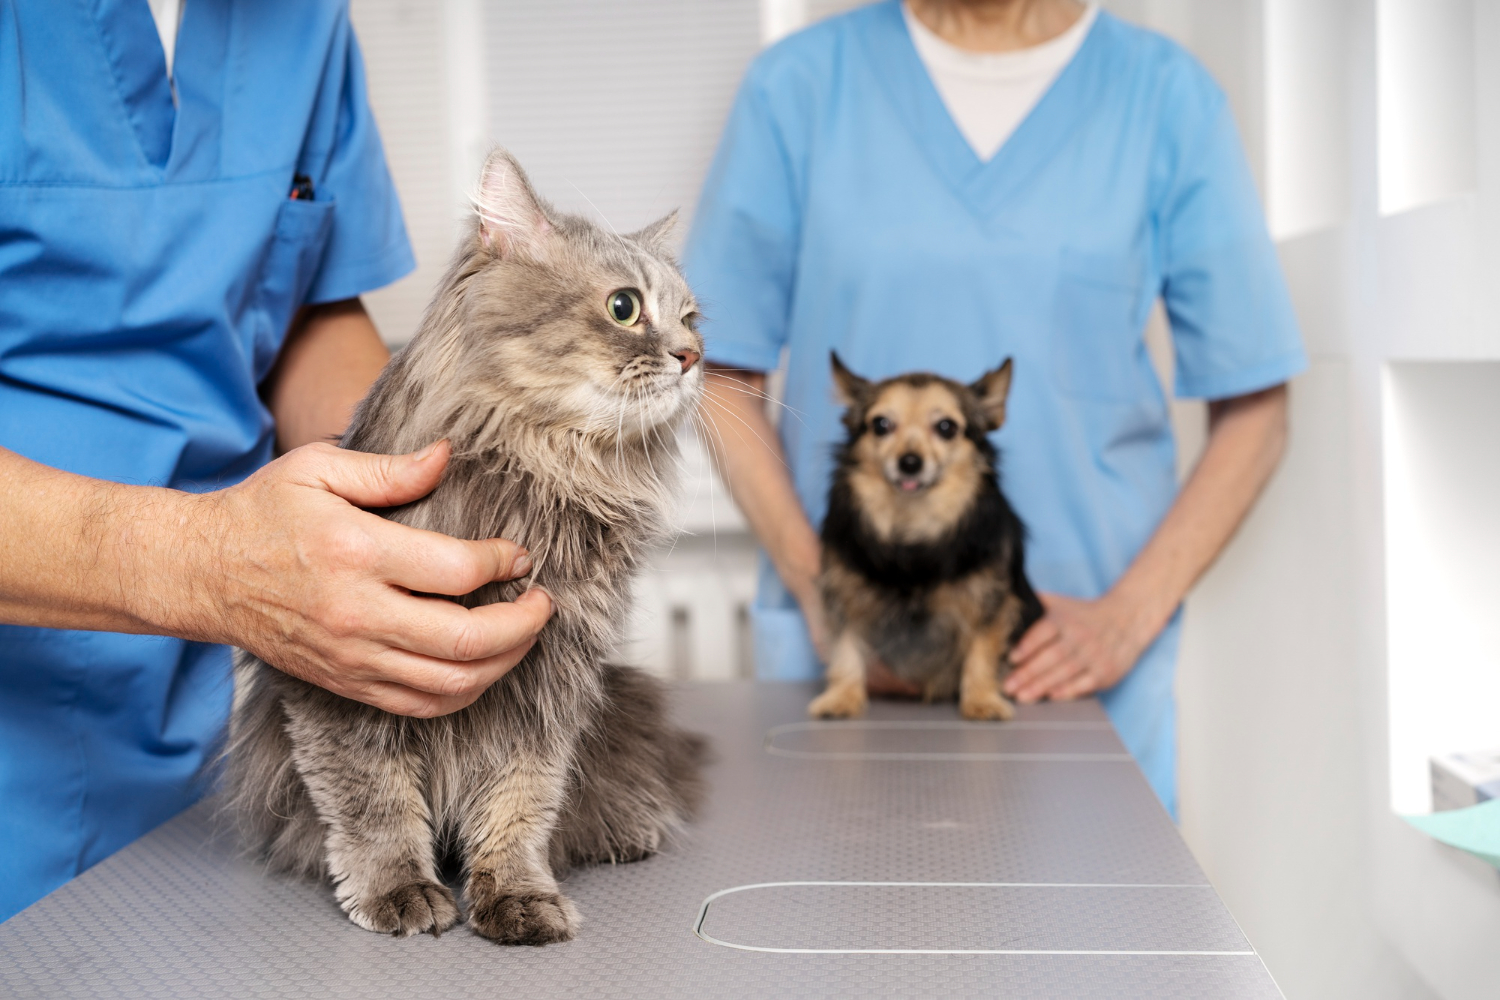 Mejores estrategias para atraer clientes a tu centro veterinario